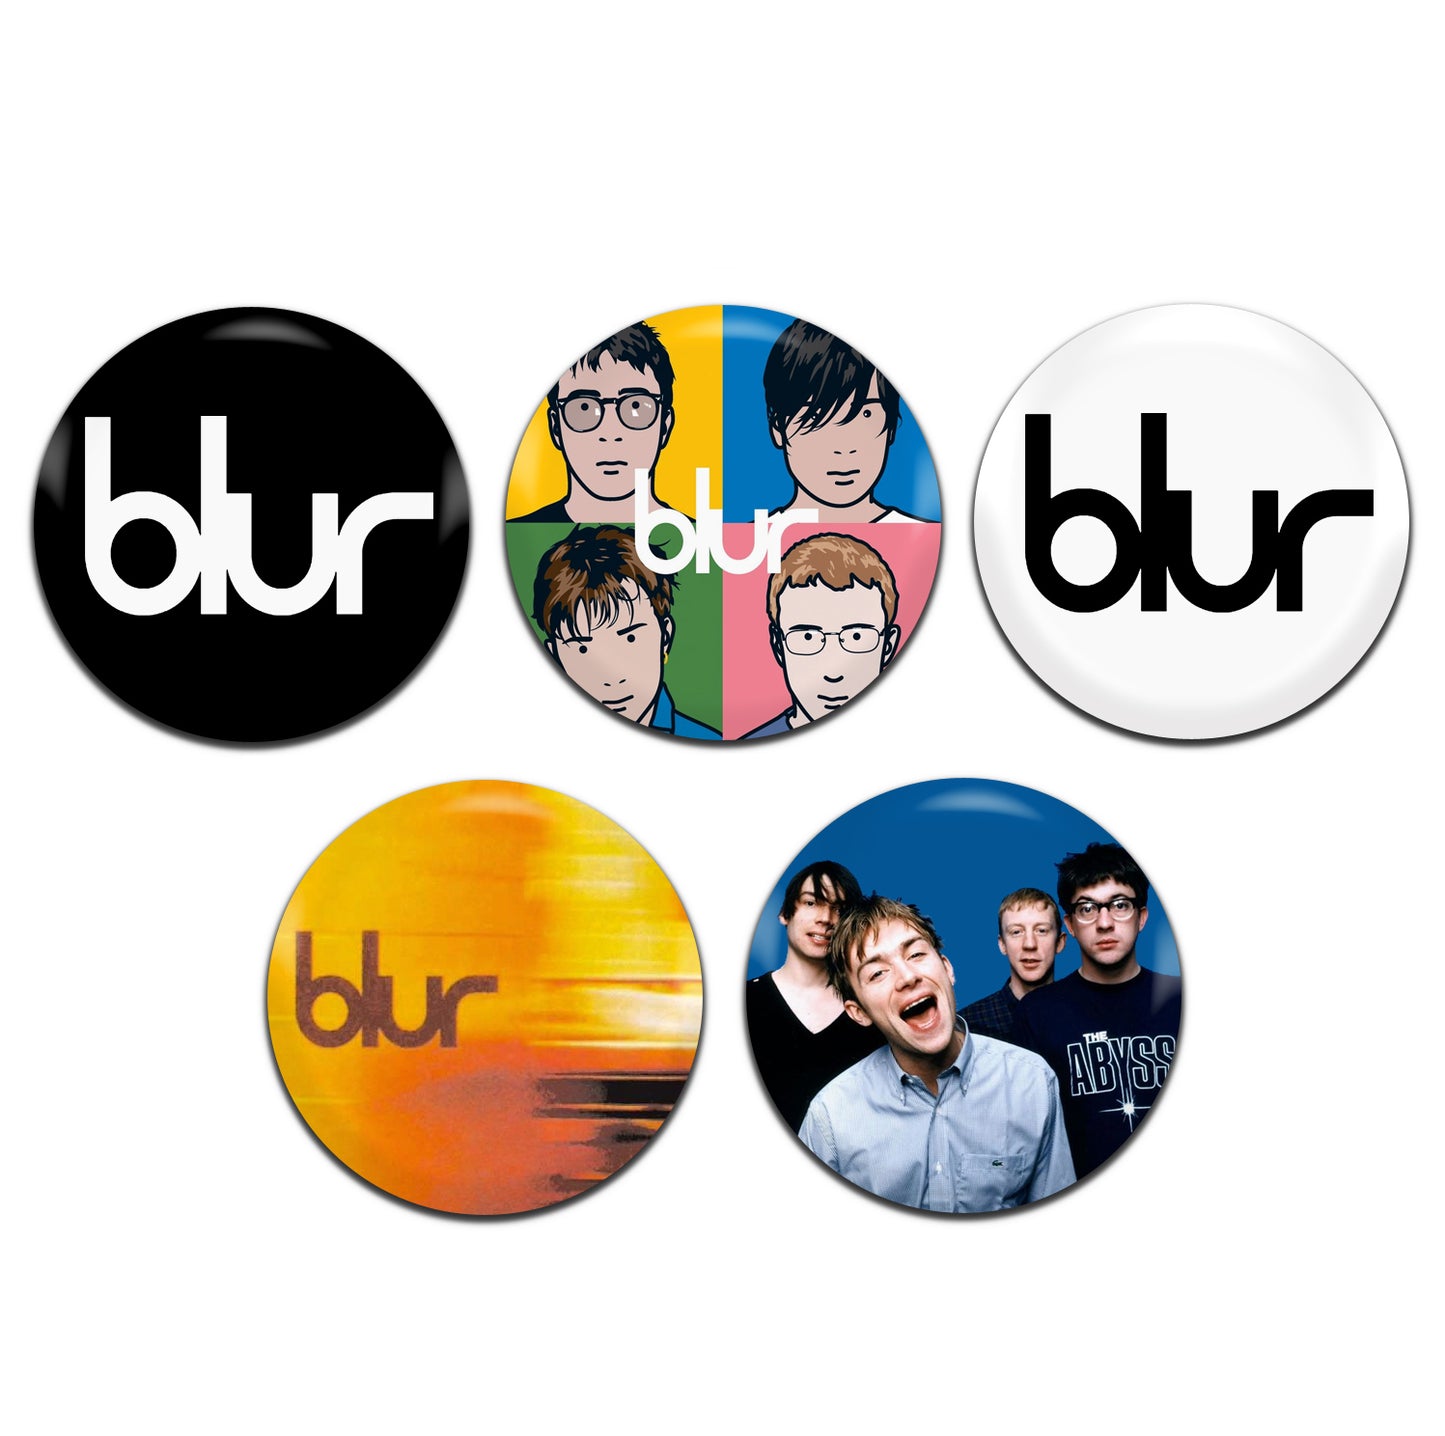 Blur Indie Rock Brit-Pop Band 90's 25mm / 1 Inch D-Pin Button Badges (5x Set)